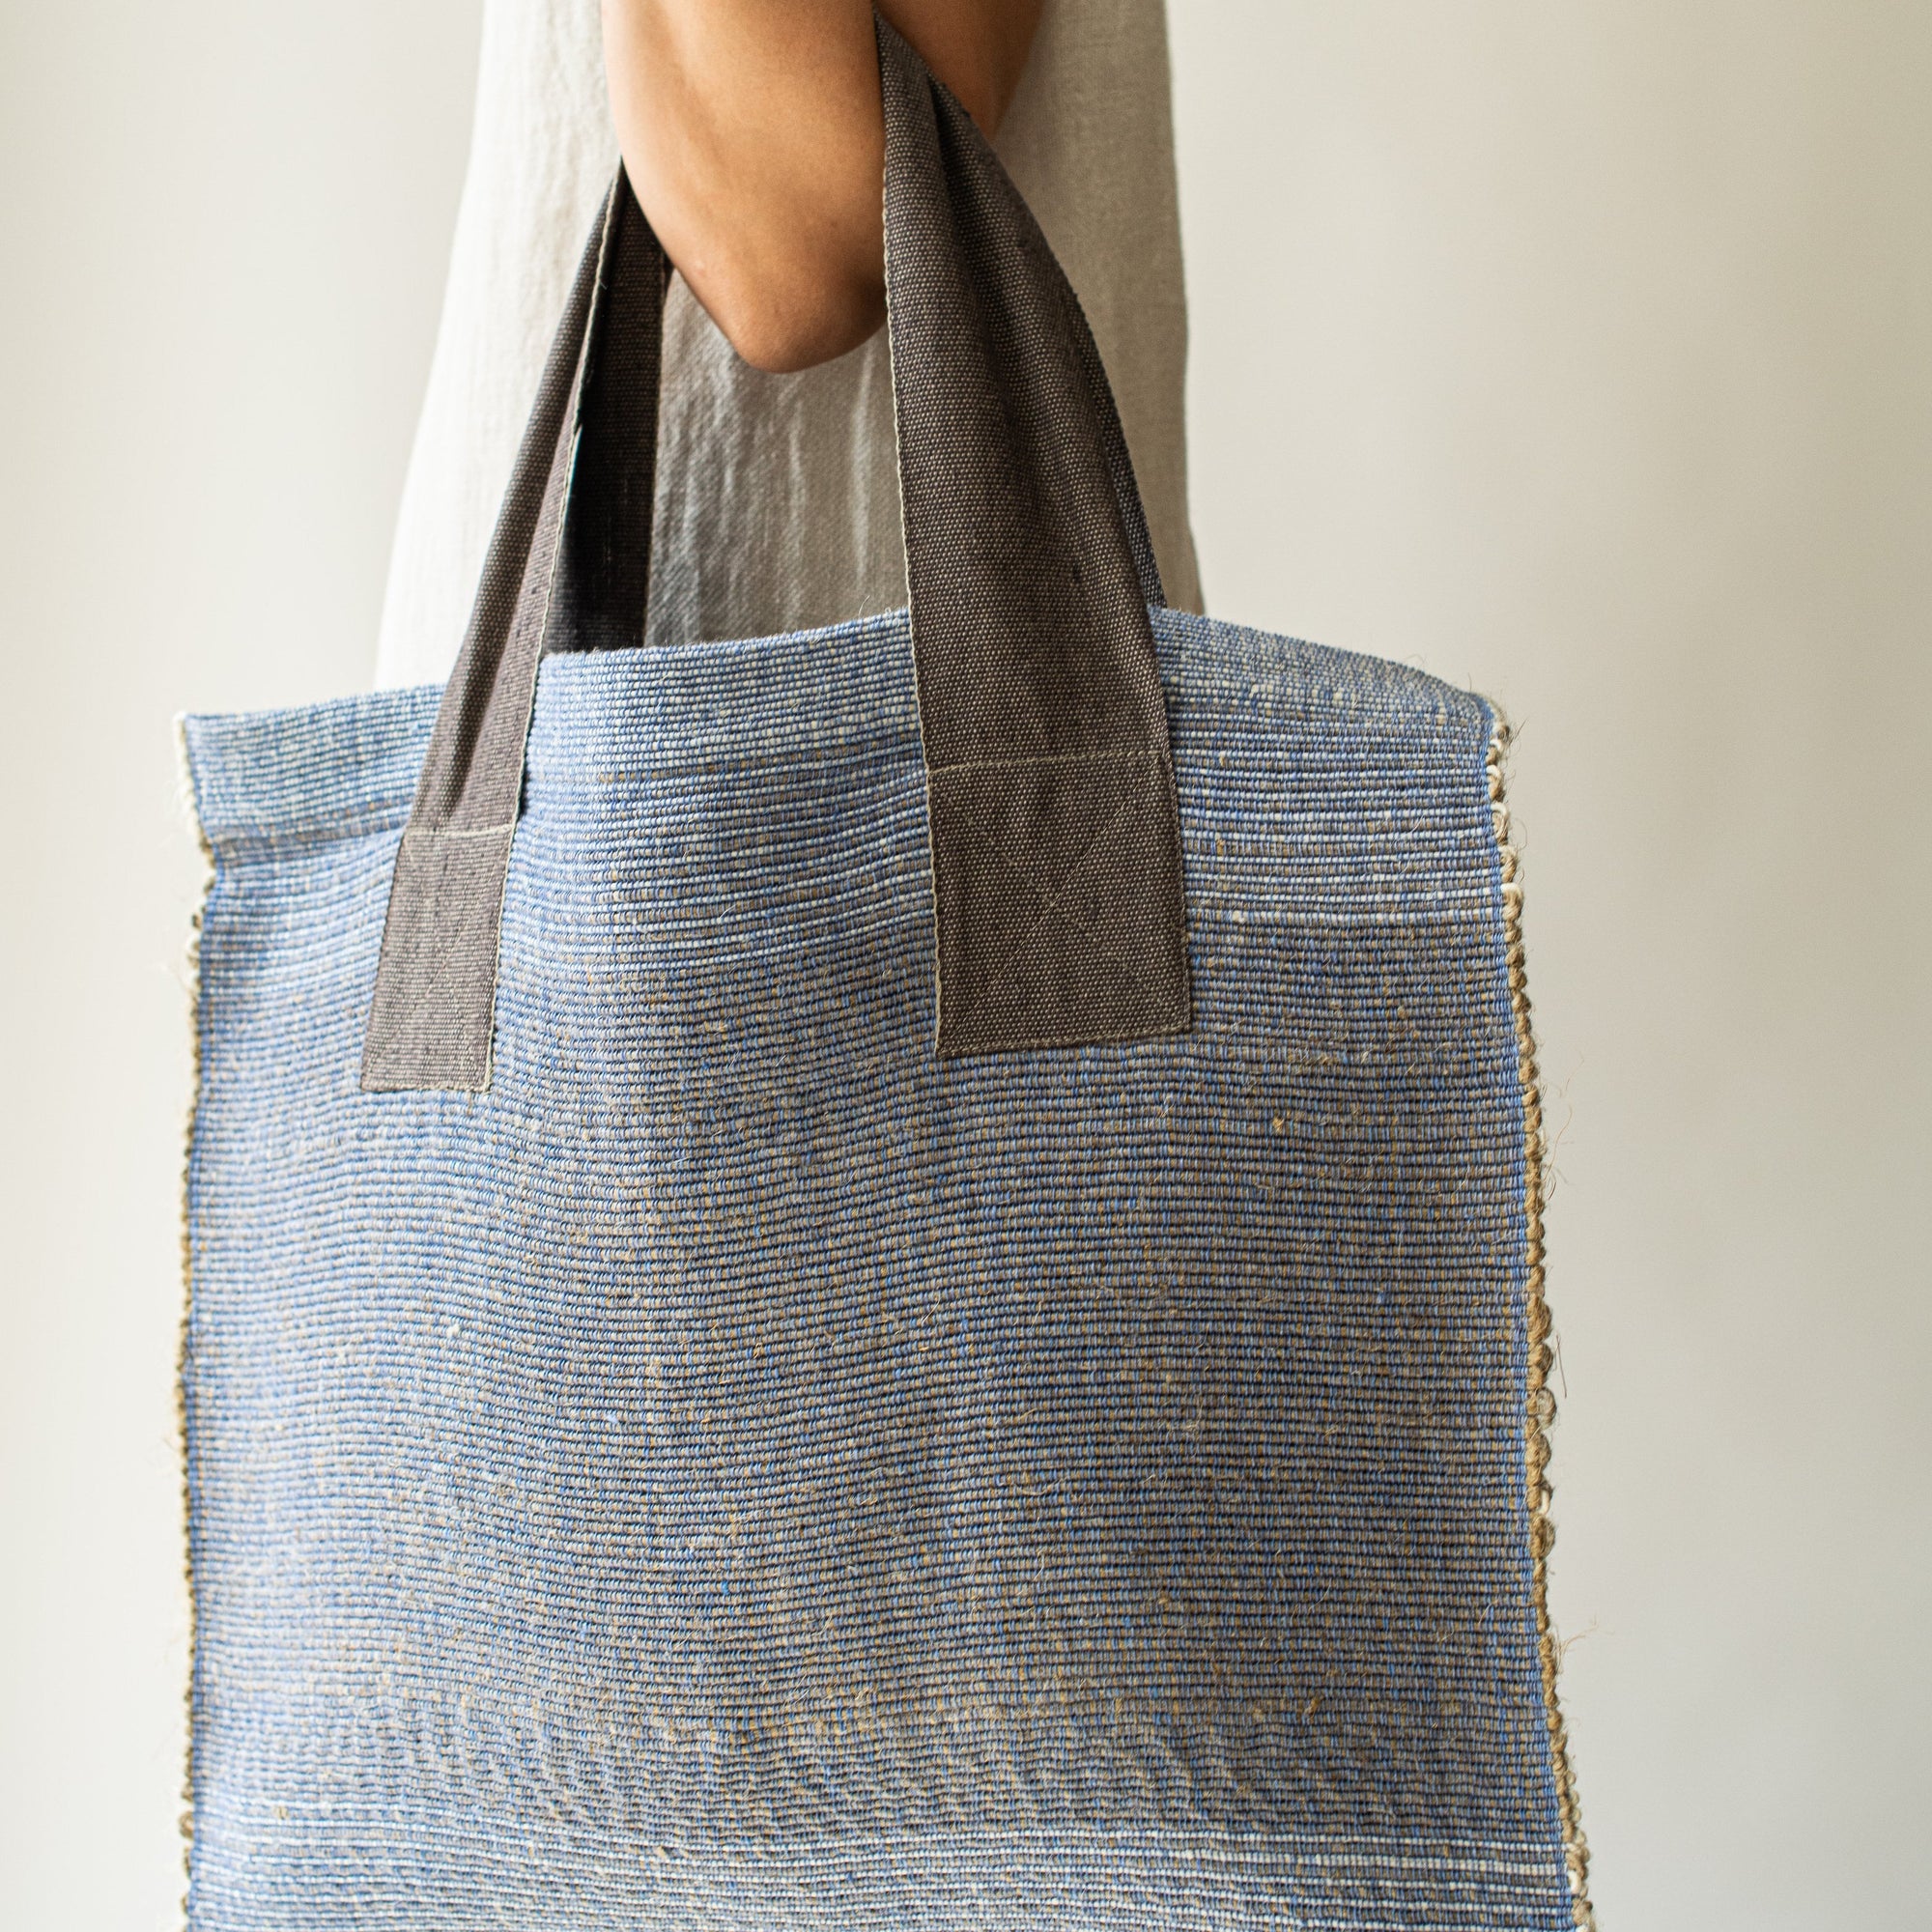 Linen shopper bag in grey and purple 47x54cm